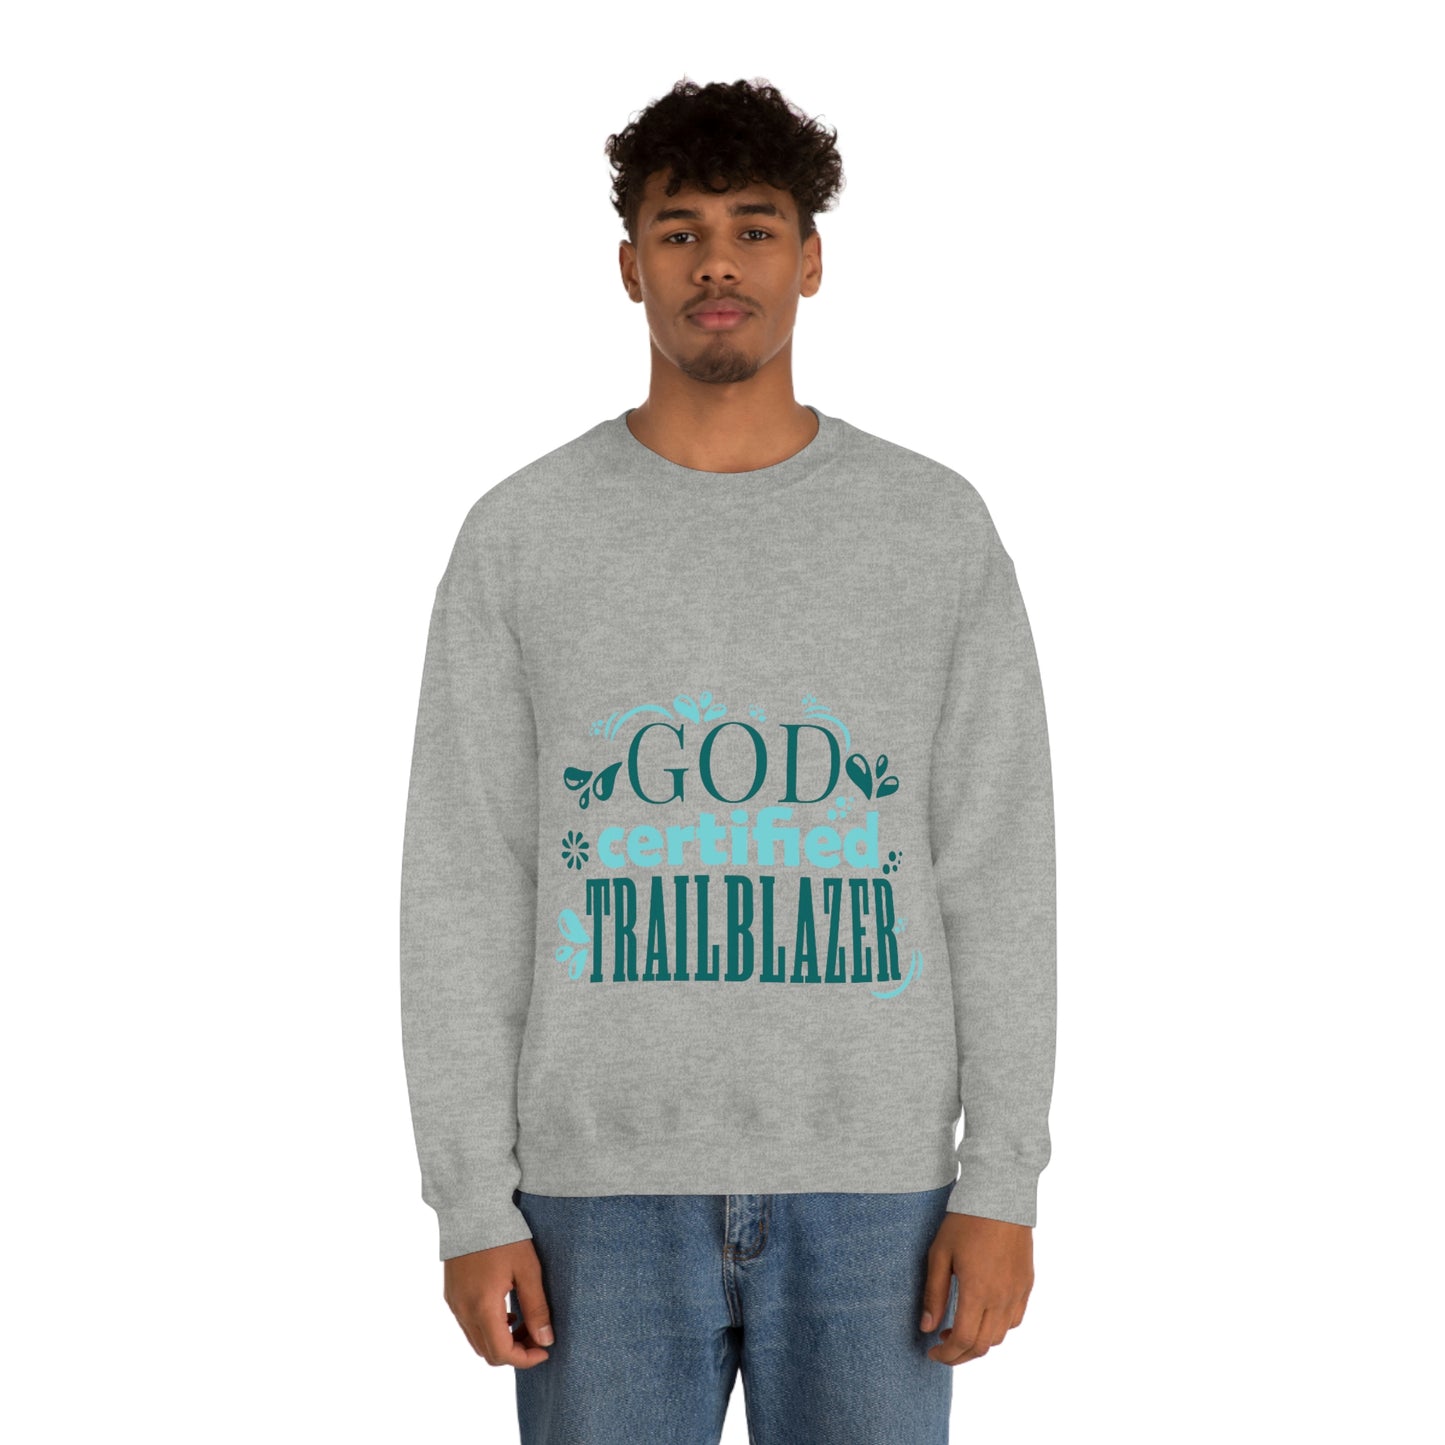 God Certified Trailblazer  Unisex Heavy Blend™ Crewneck Sweatshirt